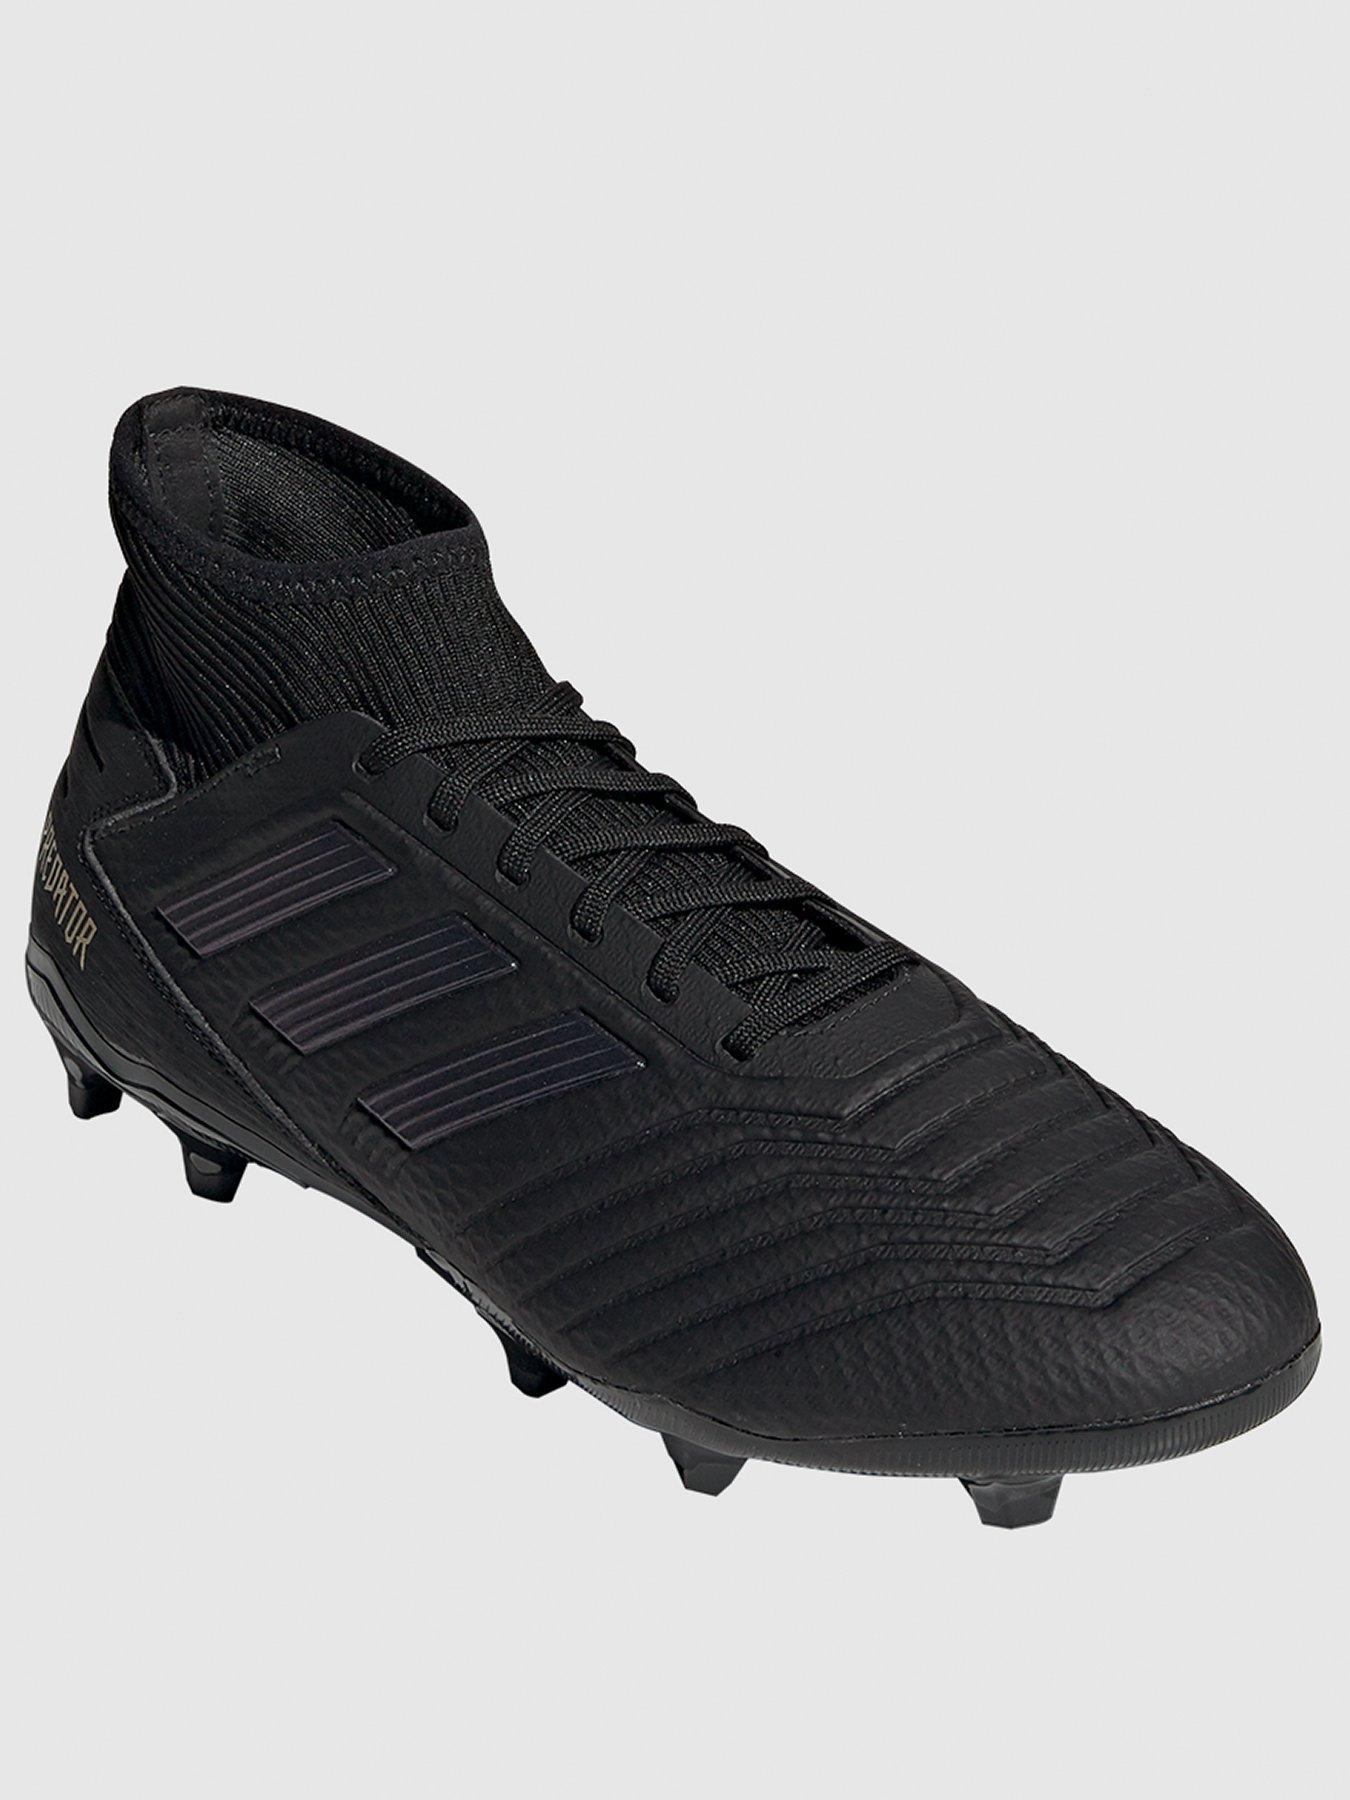 adidas Predator 19.3 Firm Ground Football Boot - Black | very.co.uk